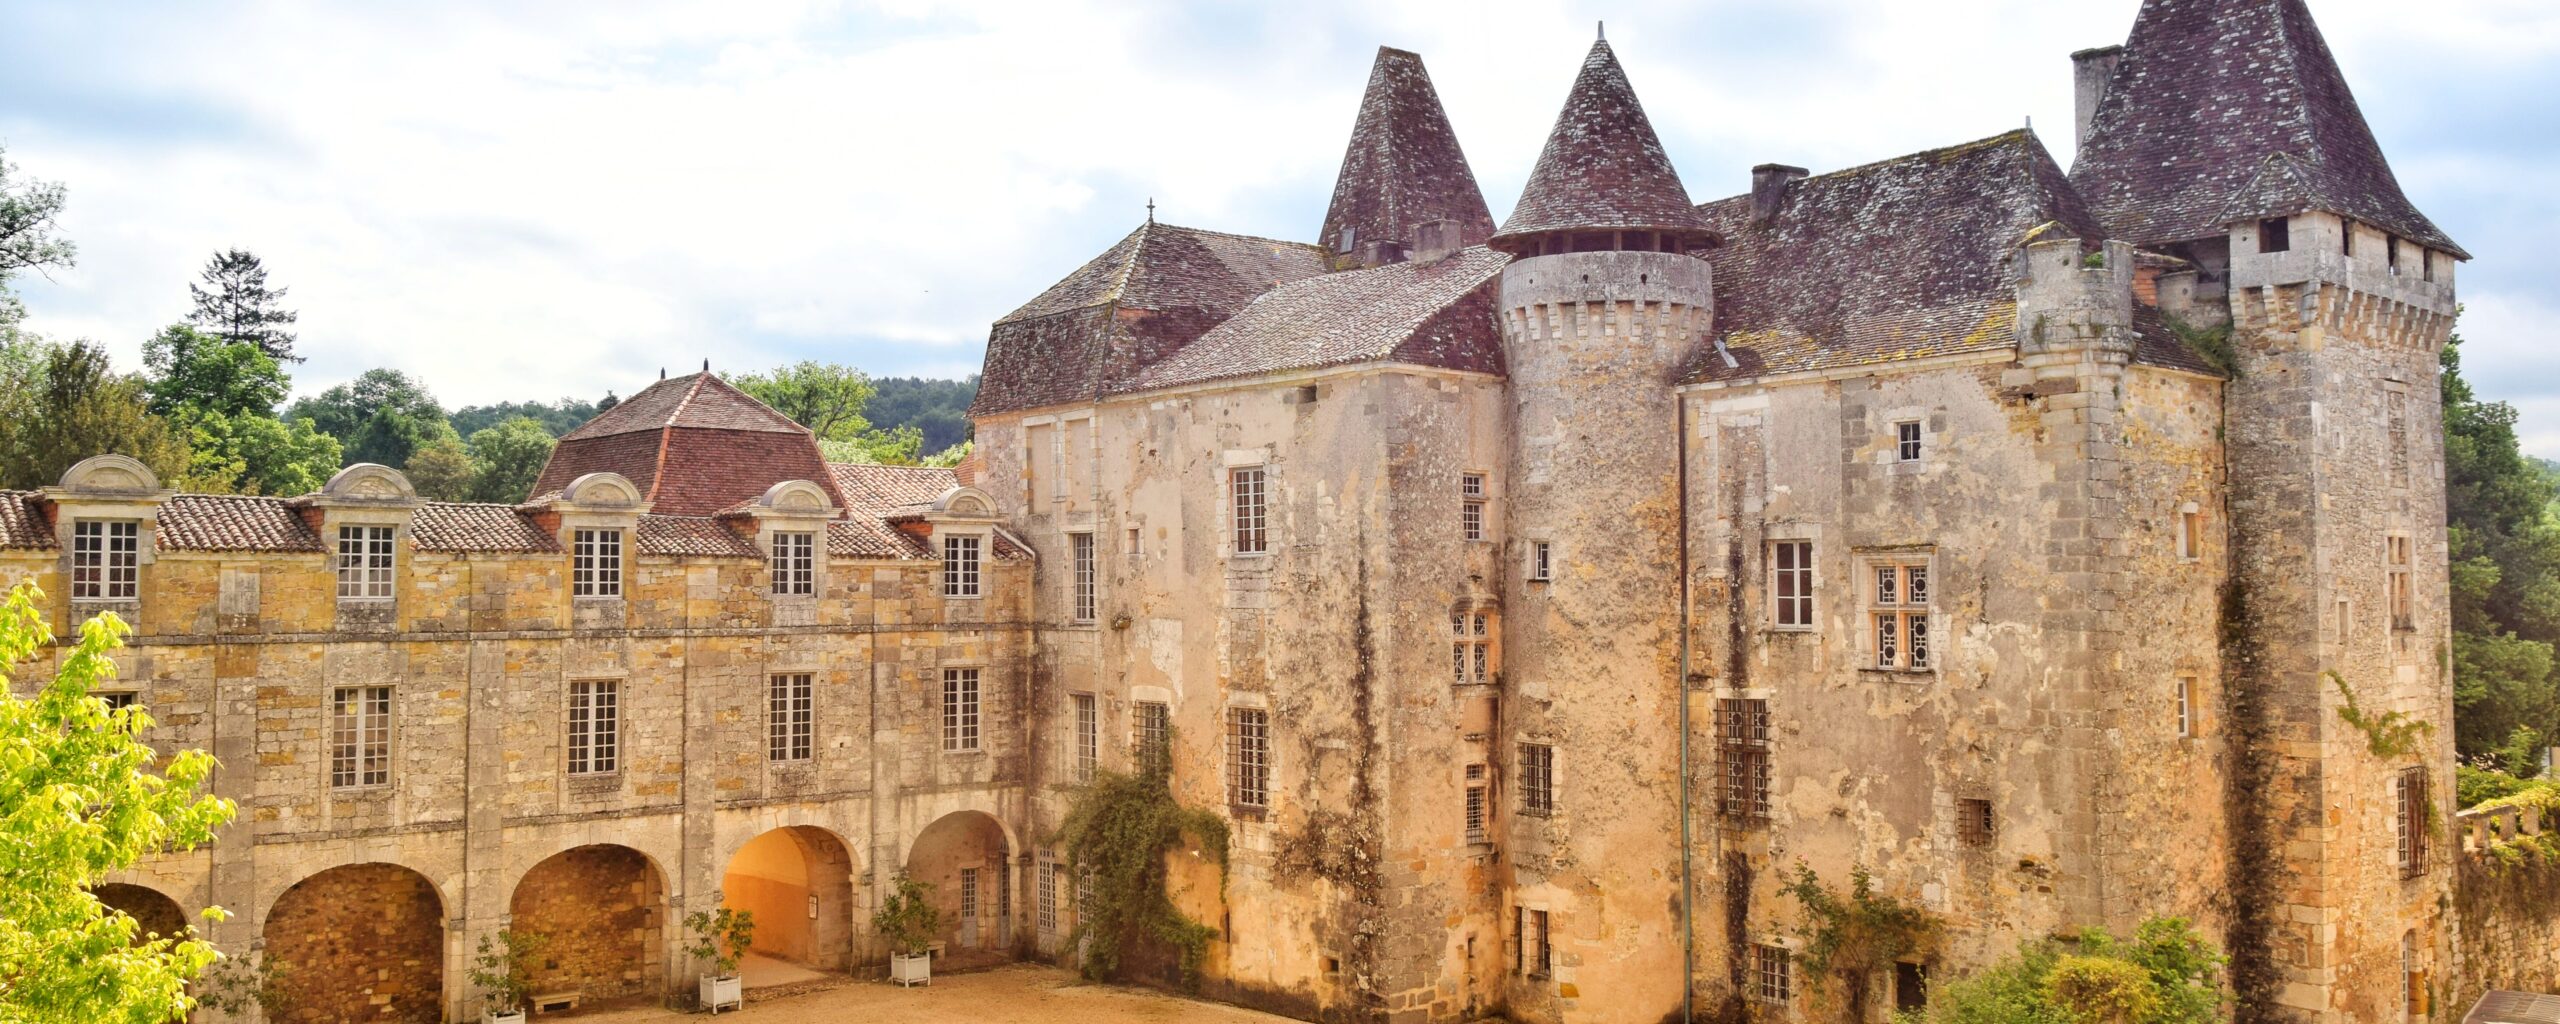 saint-jean-de-cole-chateau-la-marthonieot-perigordlimousin-scaled-aspect-ratio-2000-800